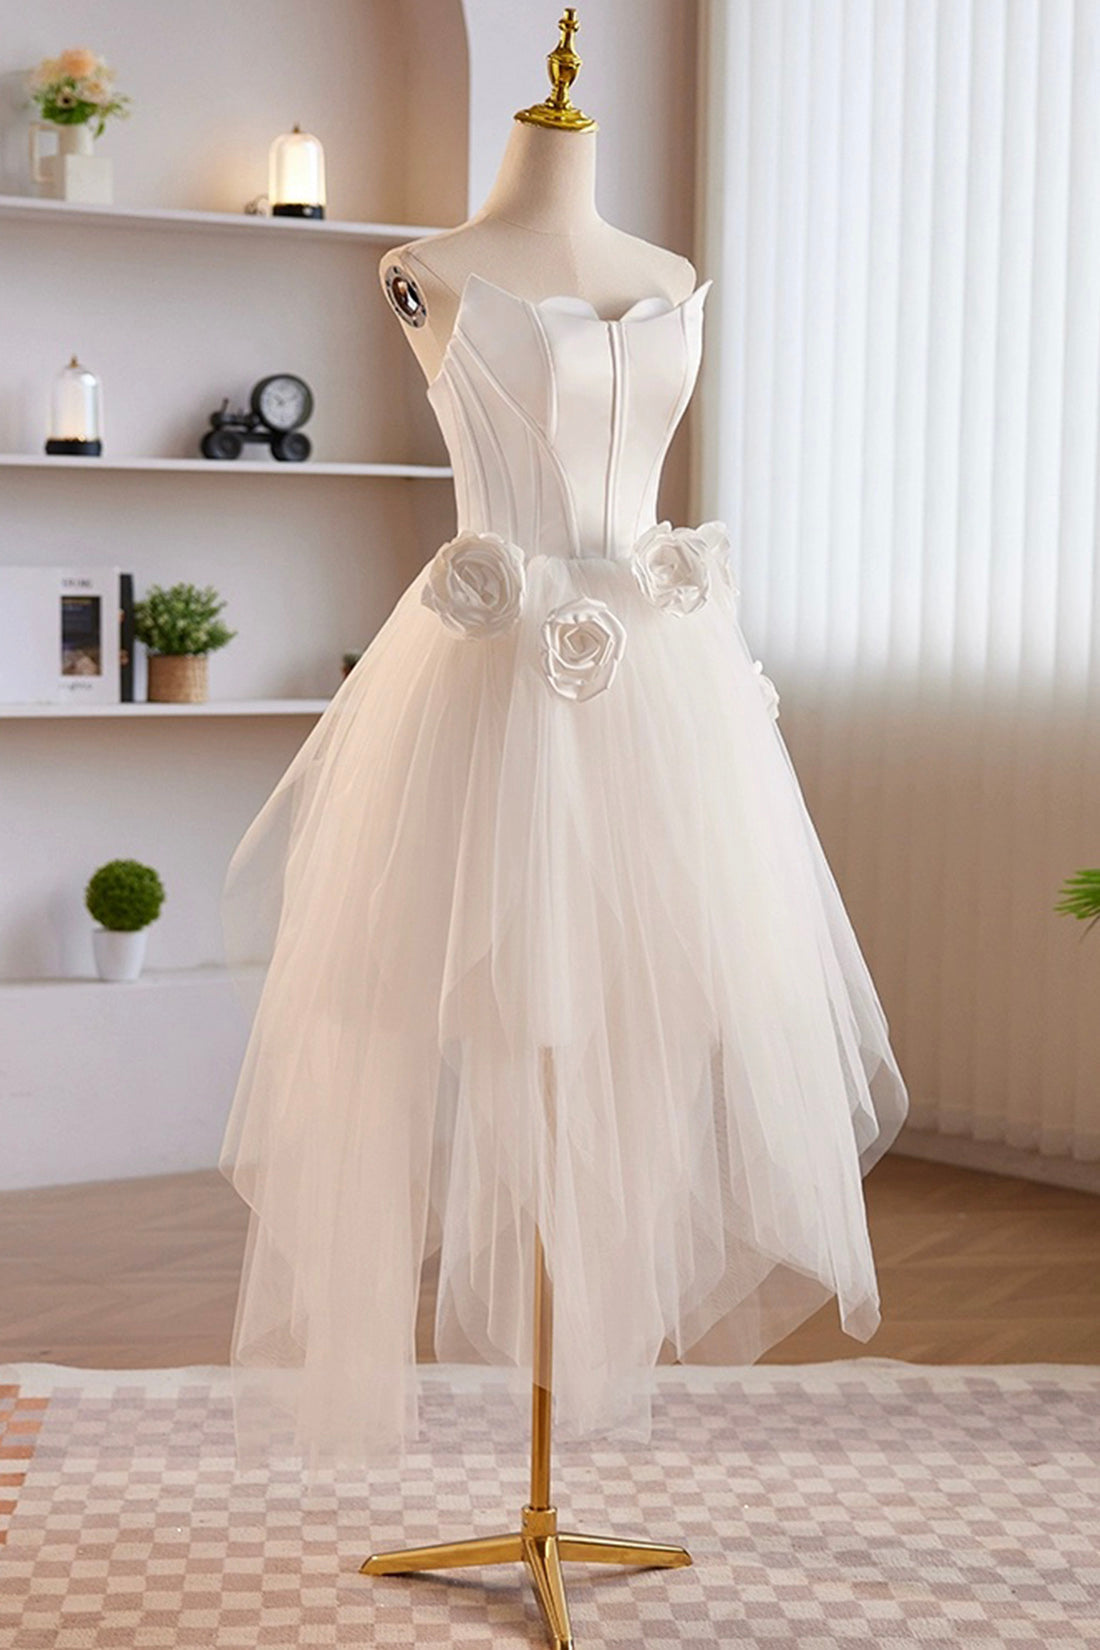 Prom Dresses Stores, Unique White Strapless Irregular Tulle Short Prom Dress, White Party Dress